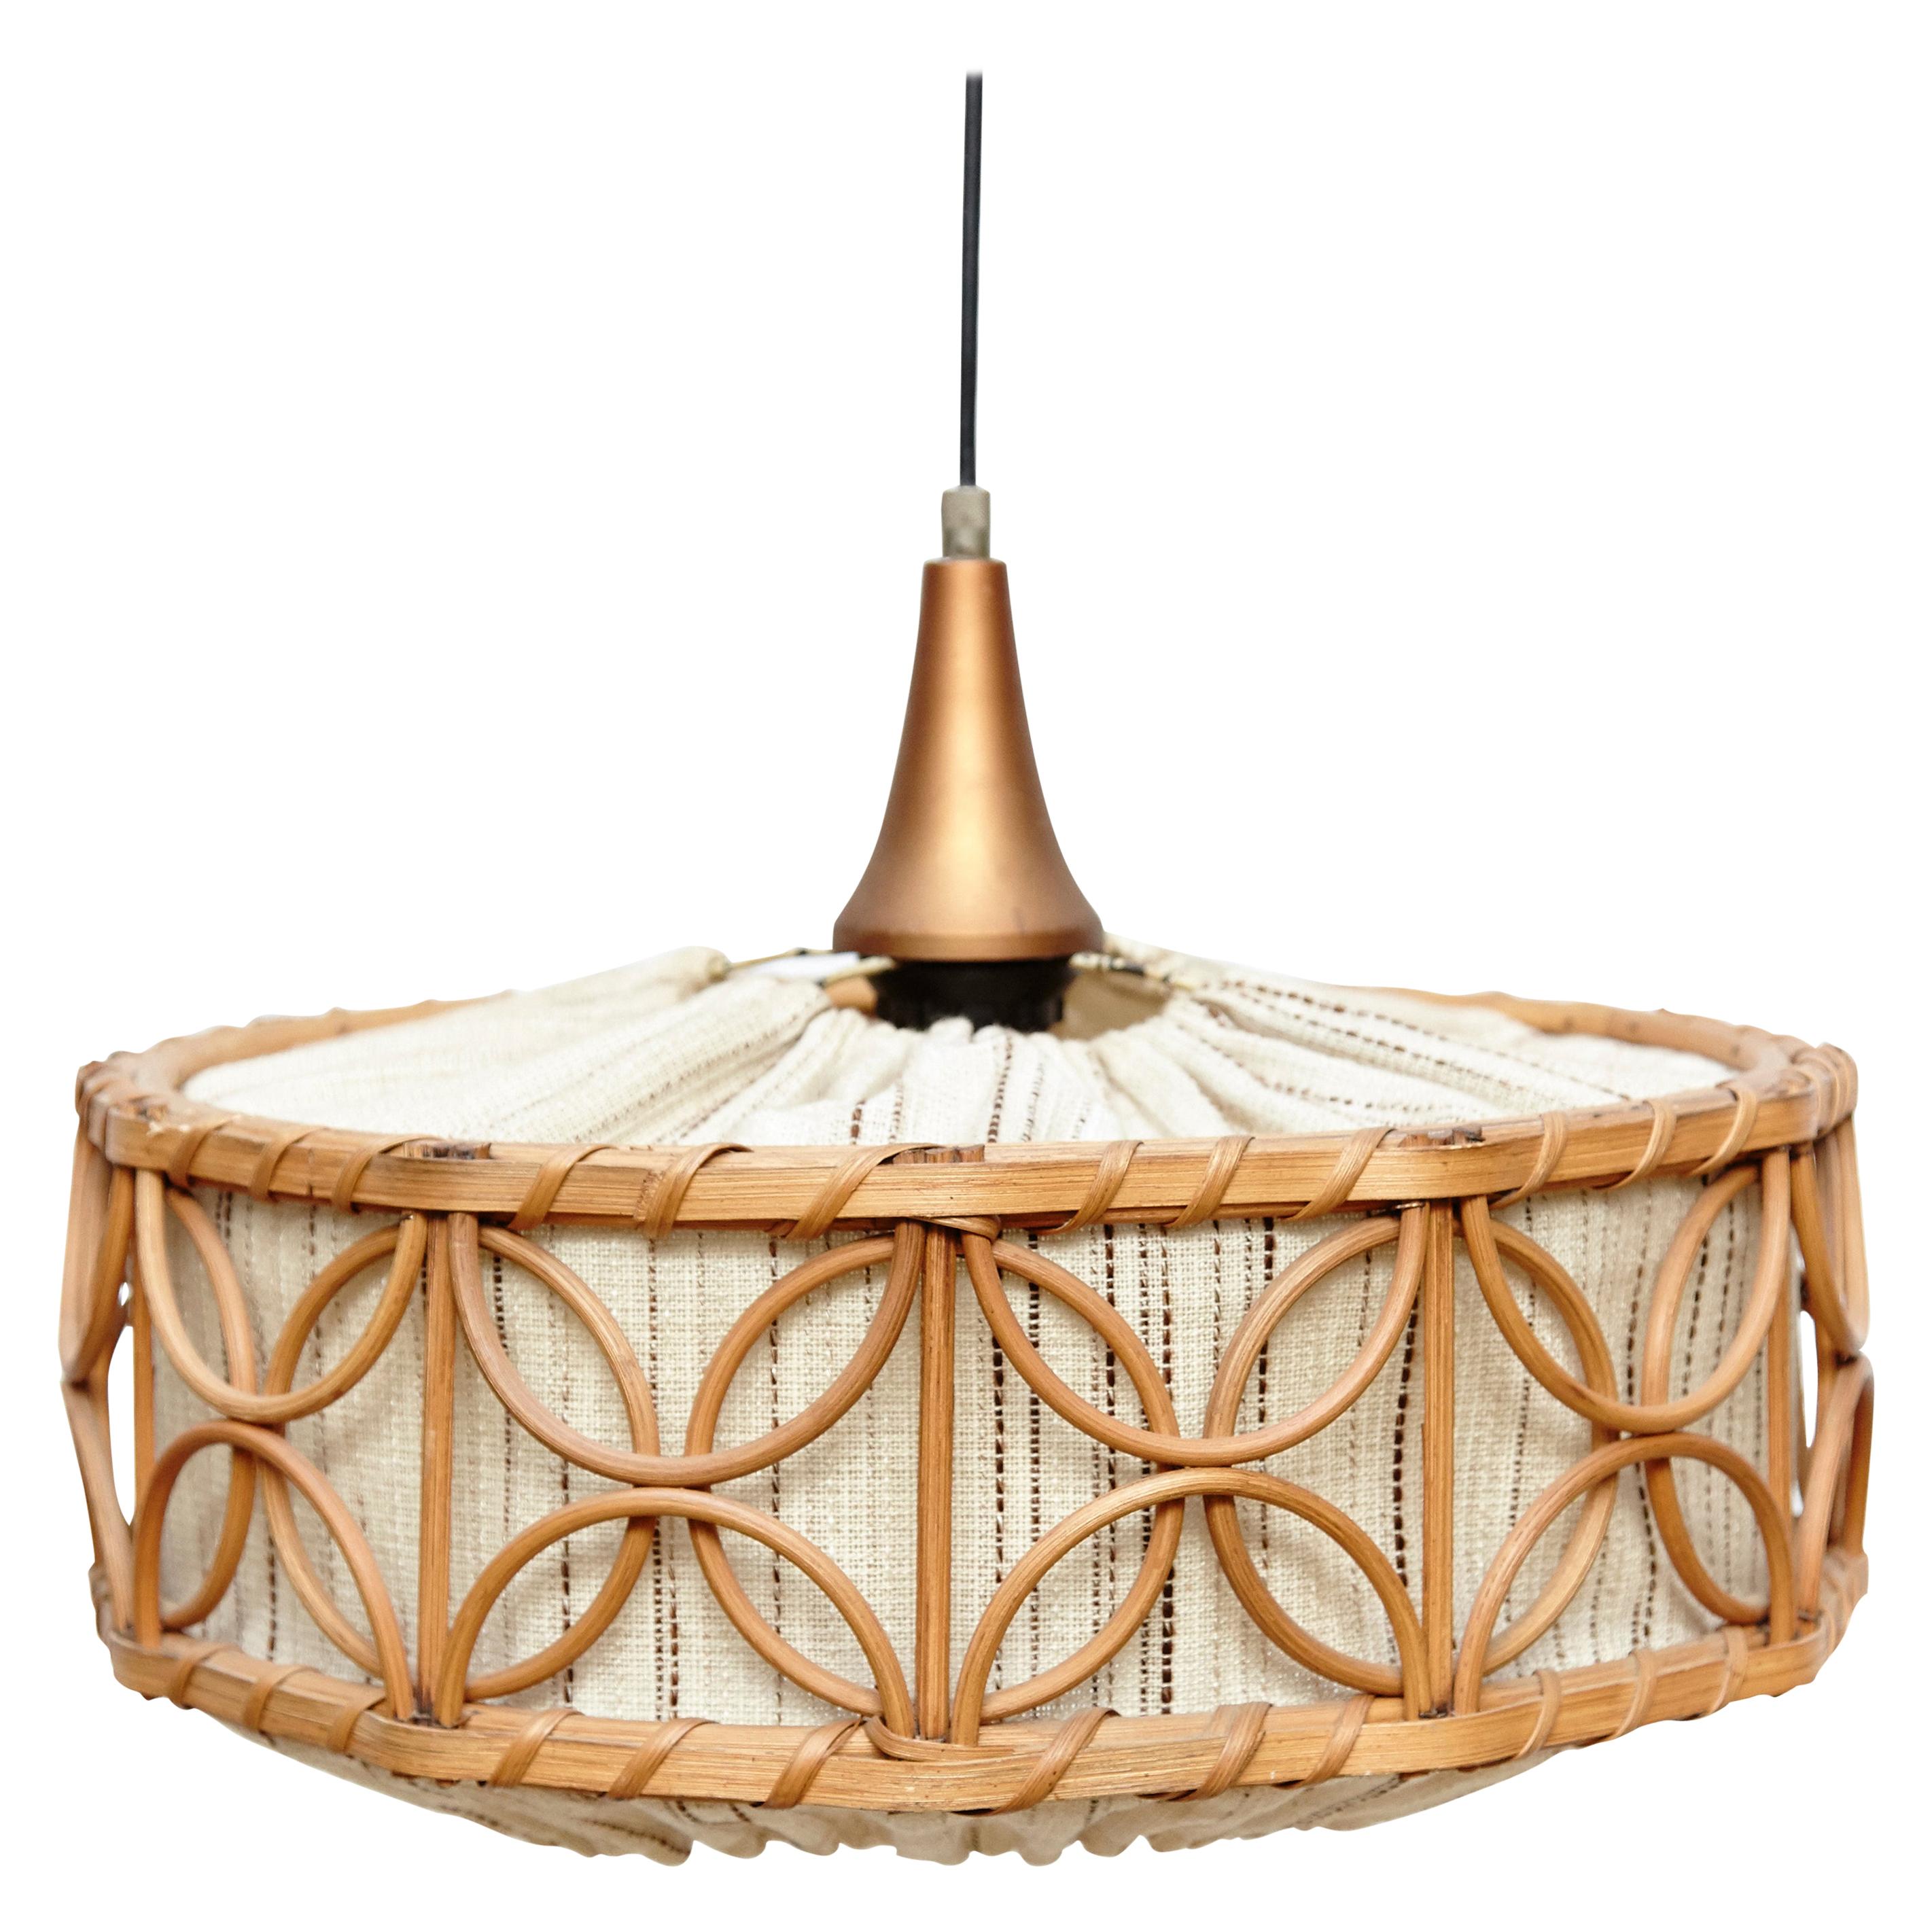 French Mid-Century Modern Rustic Rattan Ceiling Lamp, circa 1960